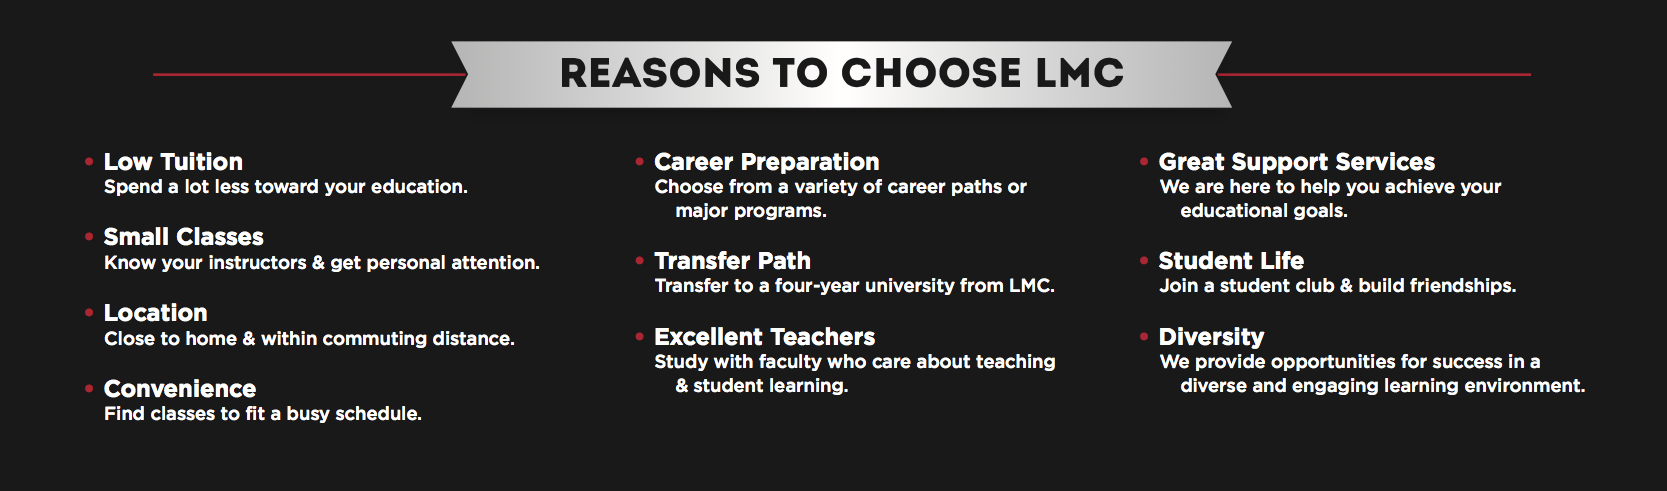 Reasons to choose LMC